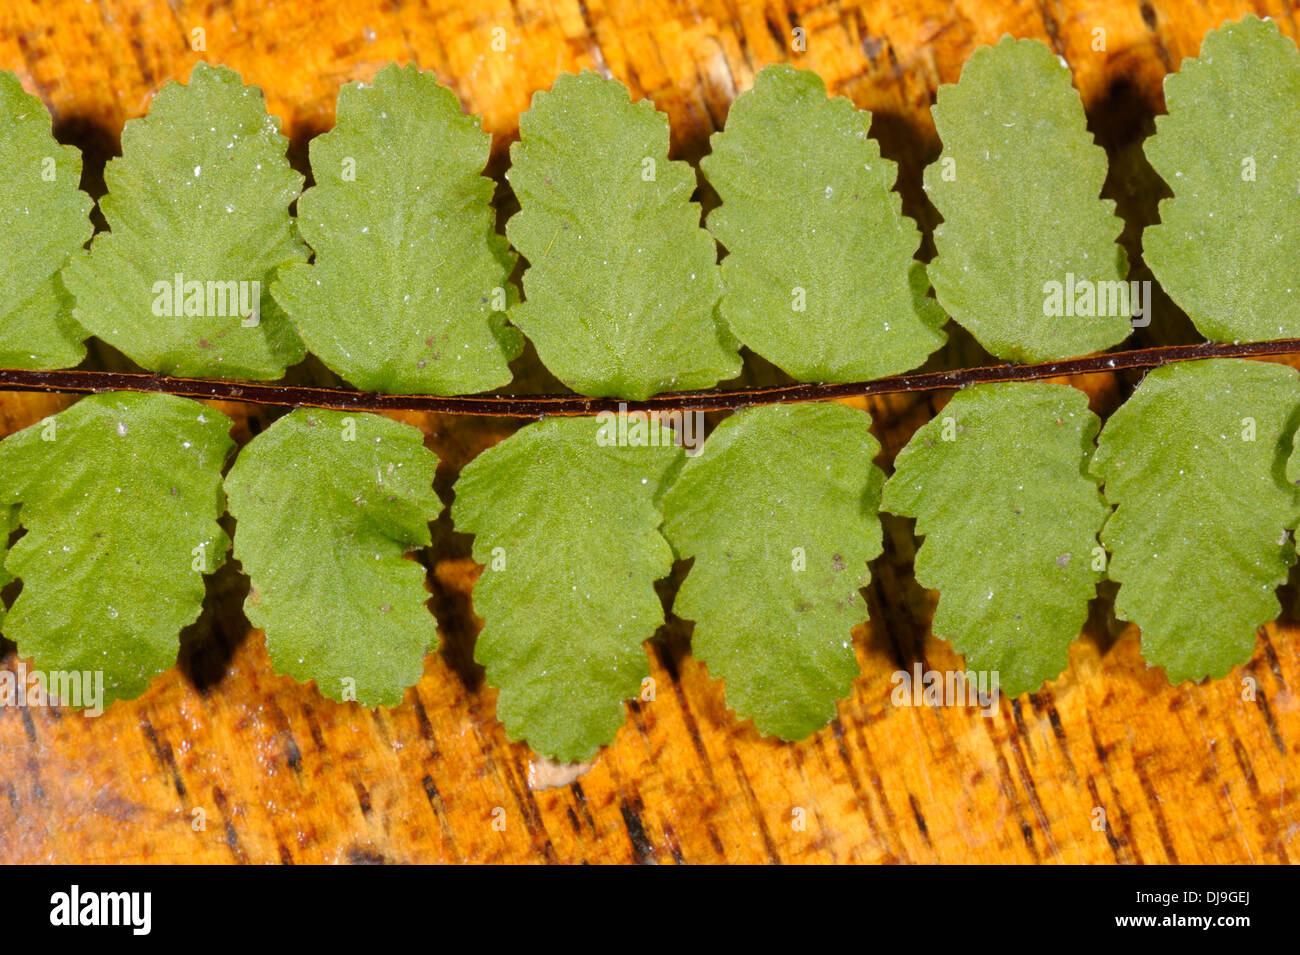 Maidenhair Spleenwort, Asplenium trichomanes subsp. pachyrachis Stock Photo